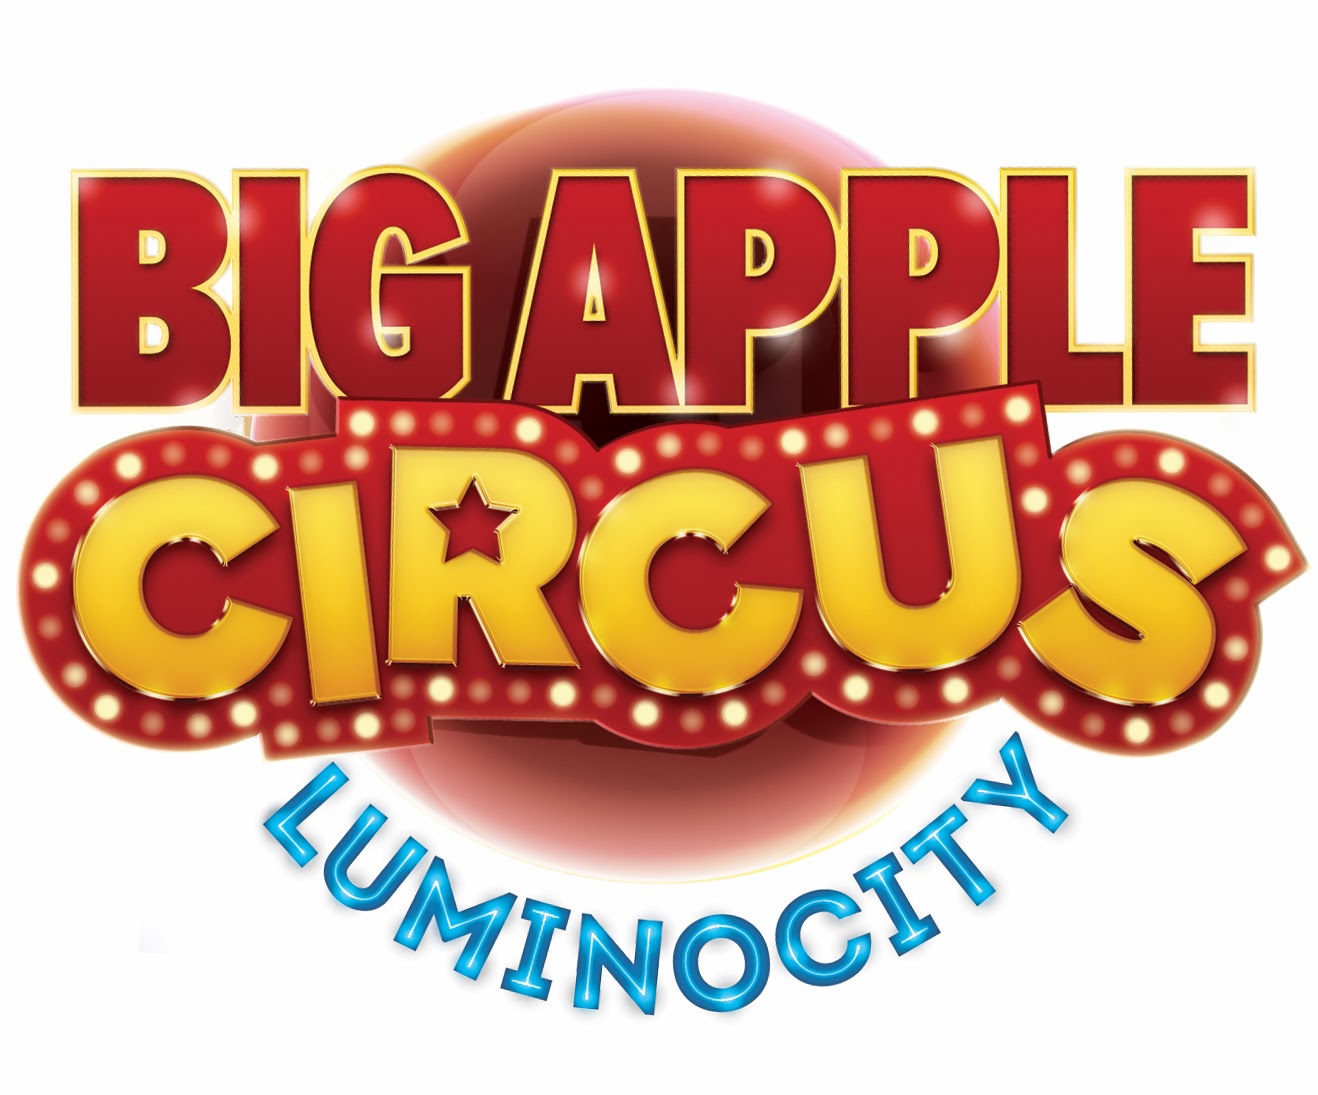 Big Apple Circus Luminocity Atlanta 2014